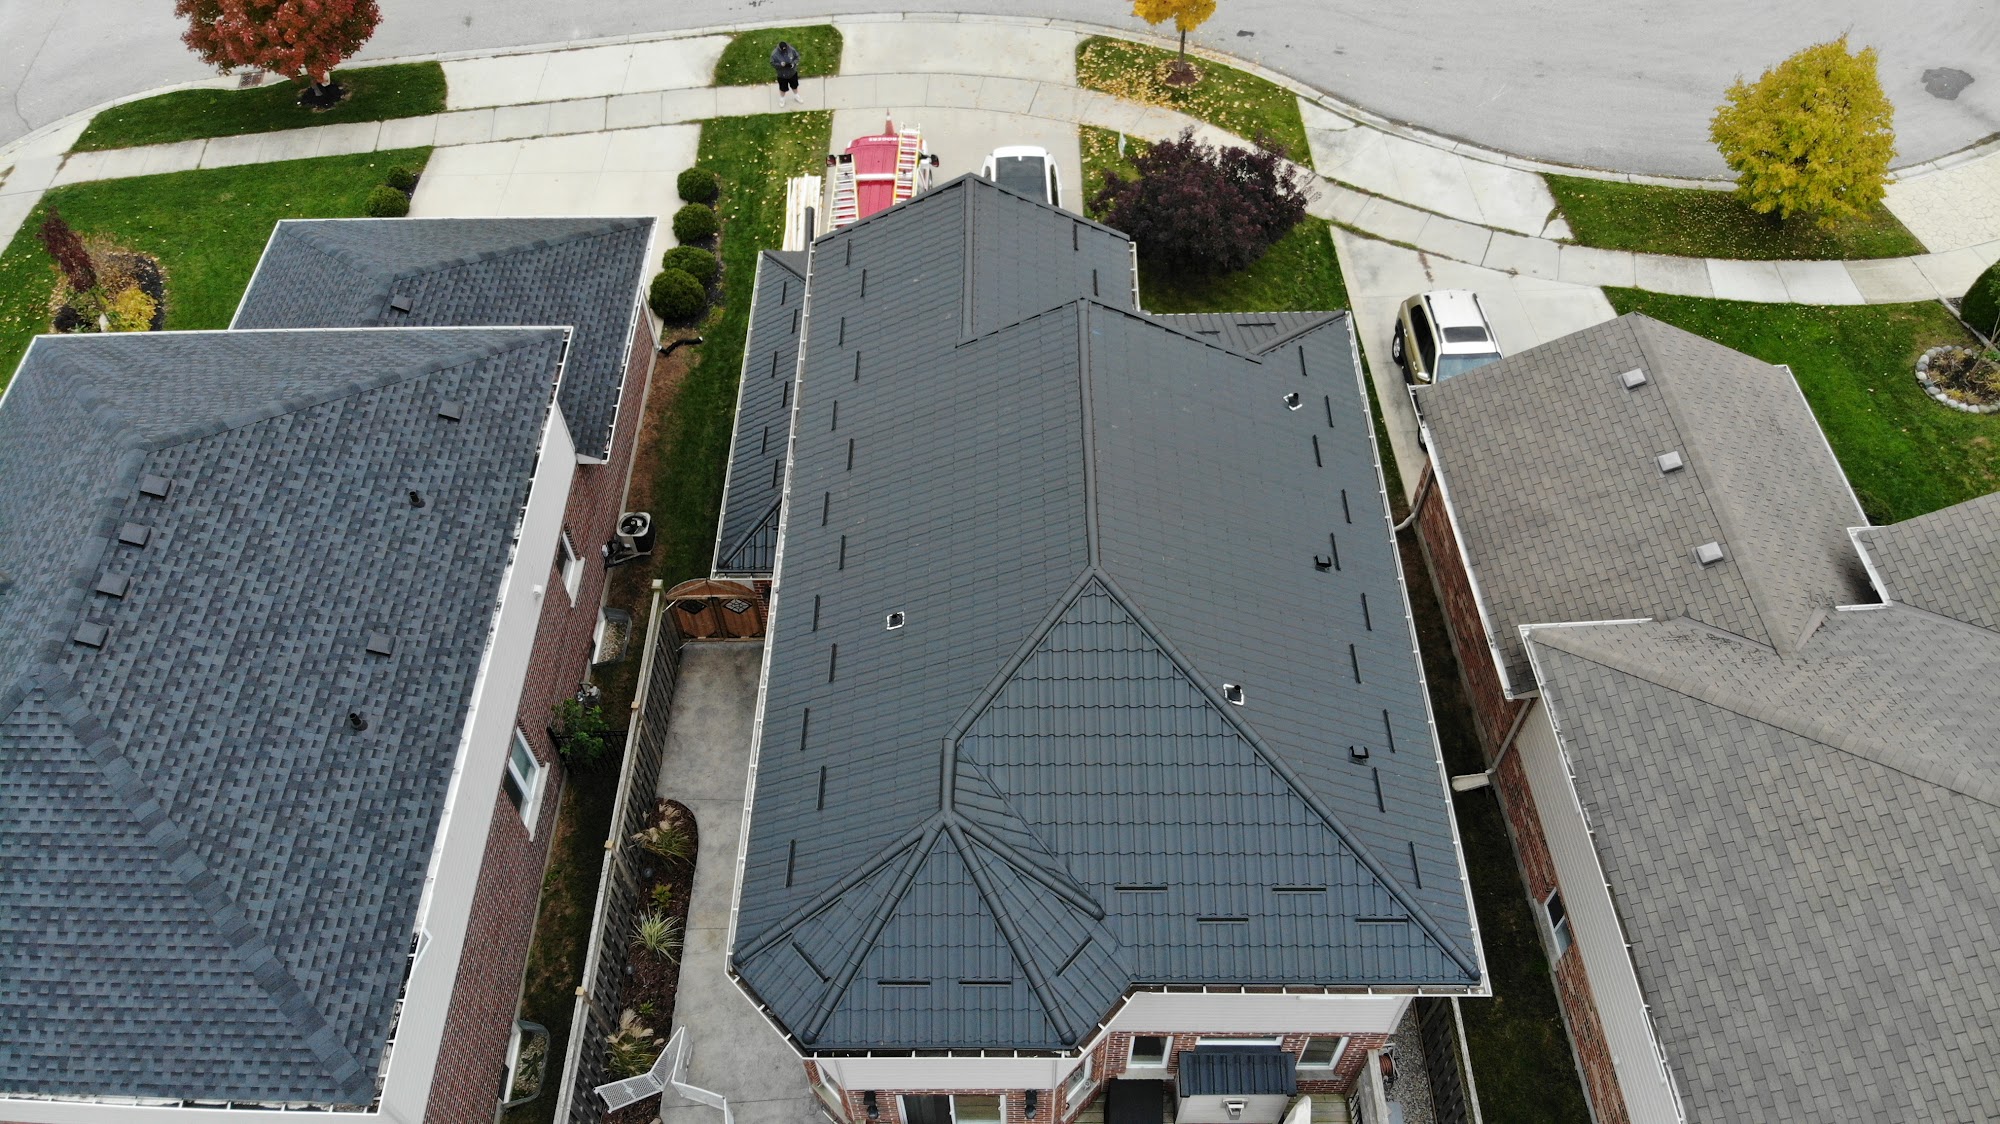 Canadian Metal Roof Manufacturing Ltd 270 Hamilton Rd, New Hamburg Ontario N3A 2K2